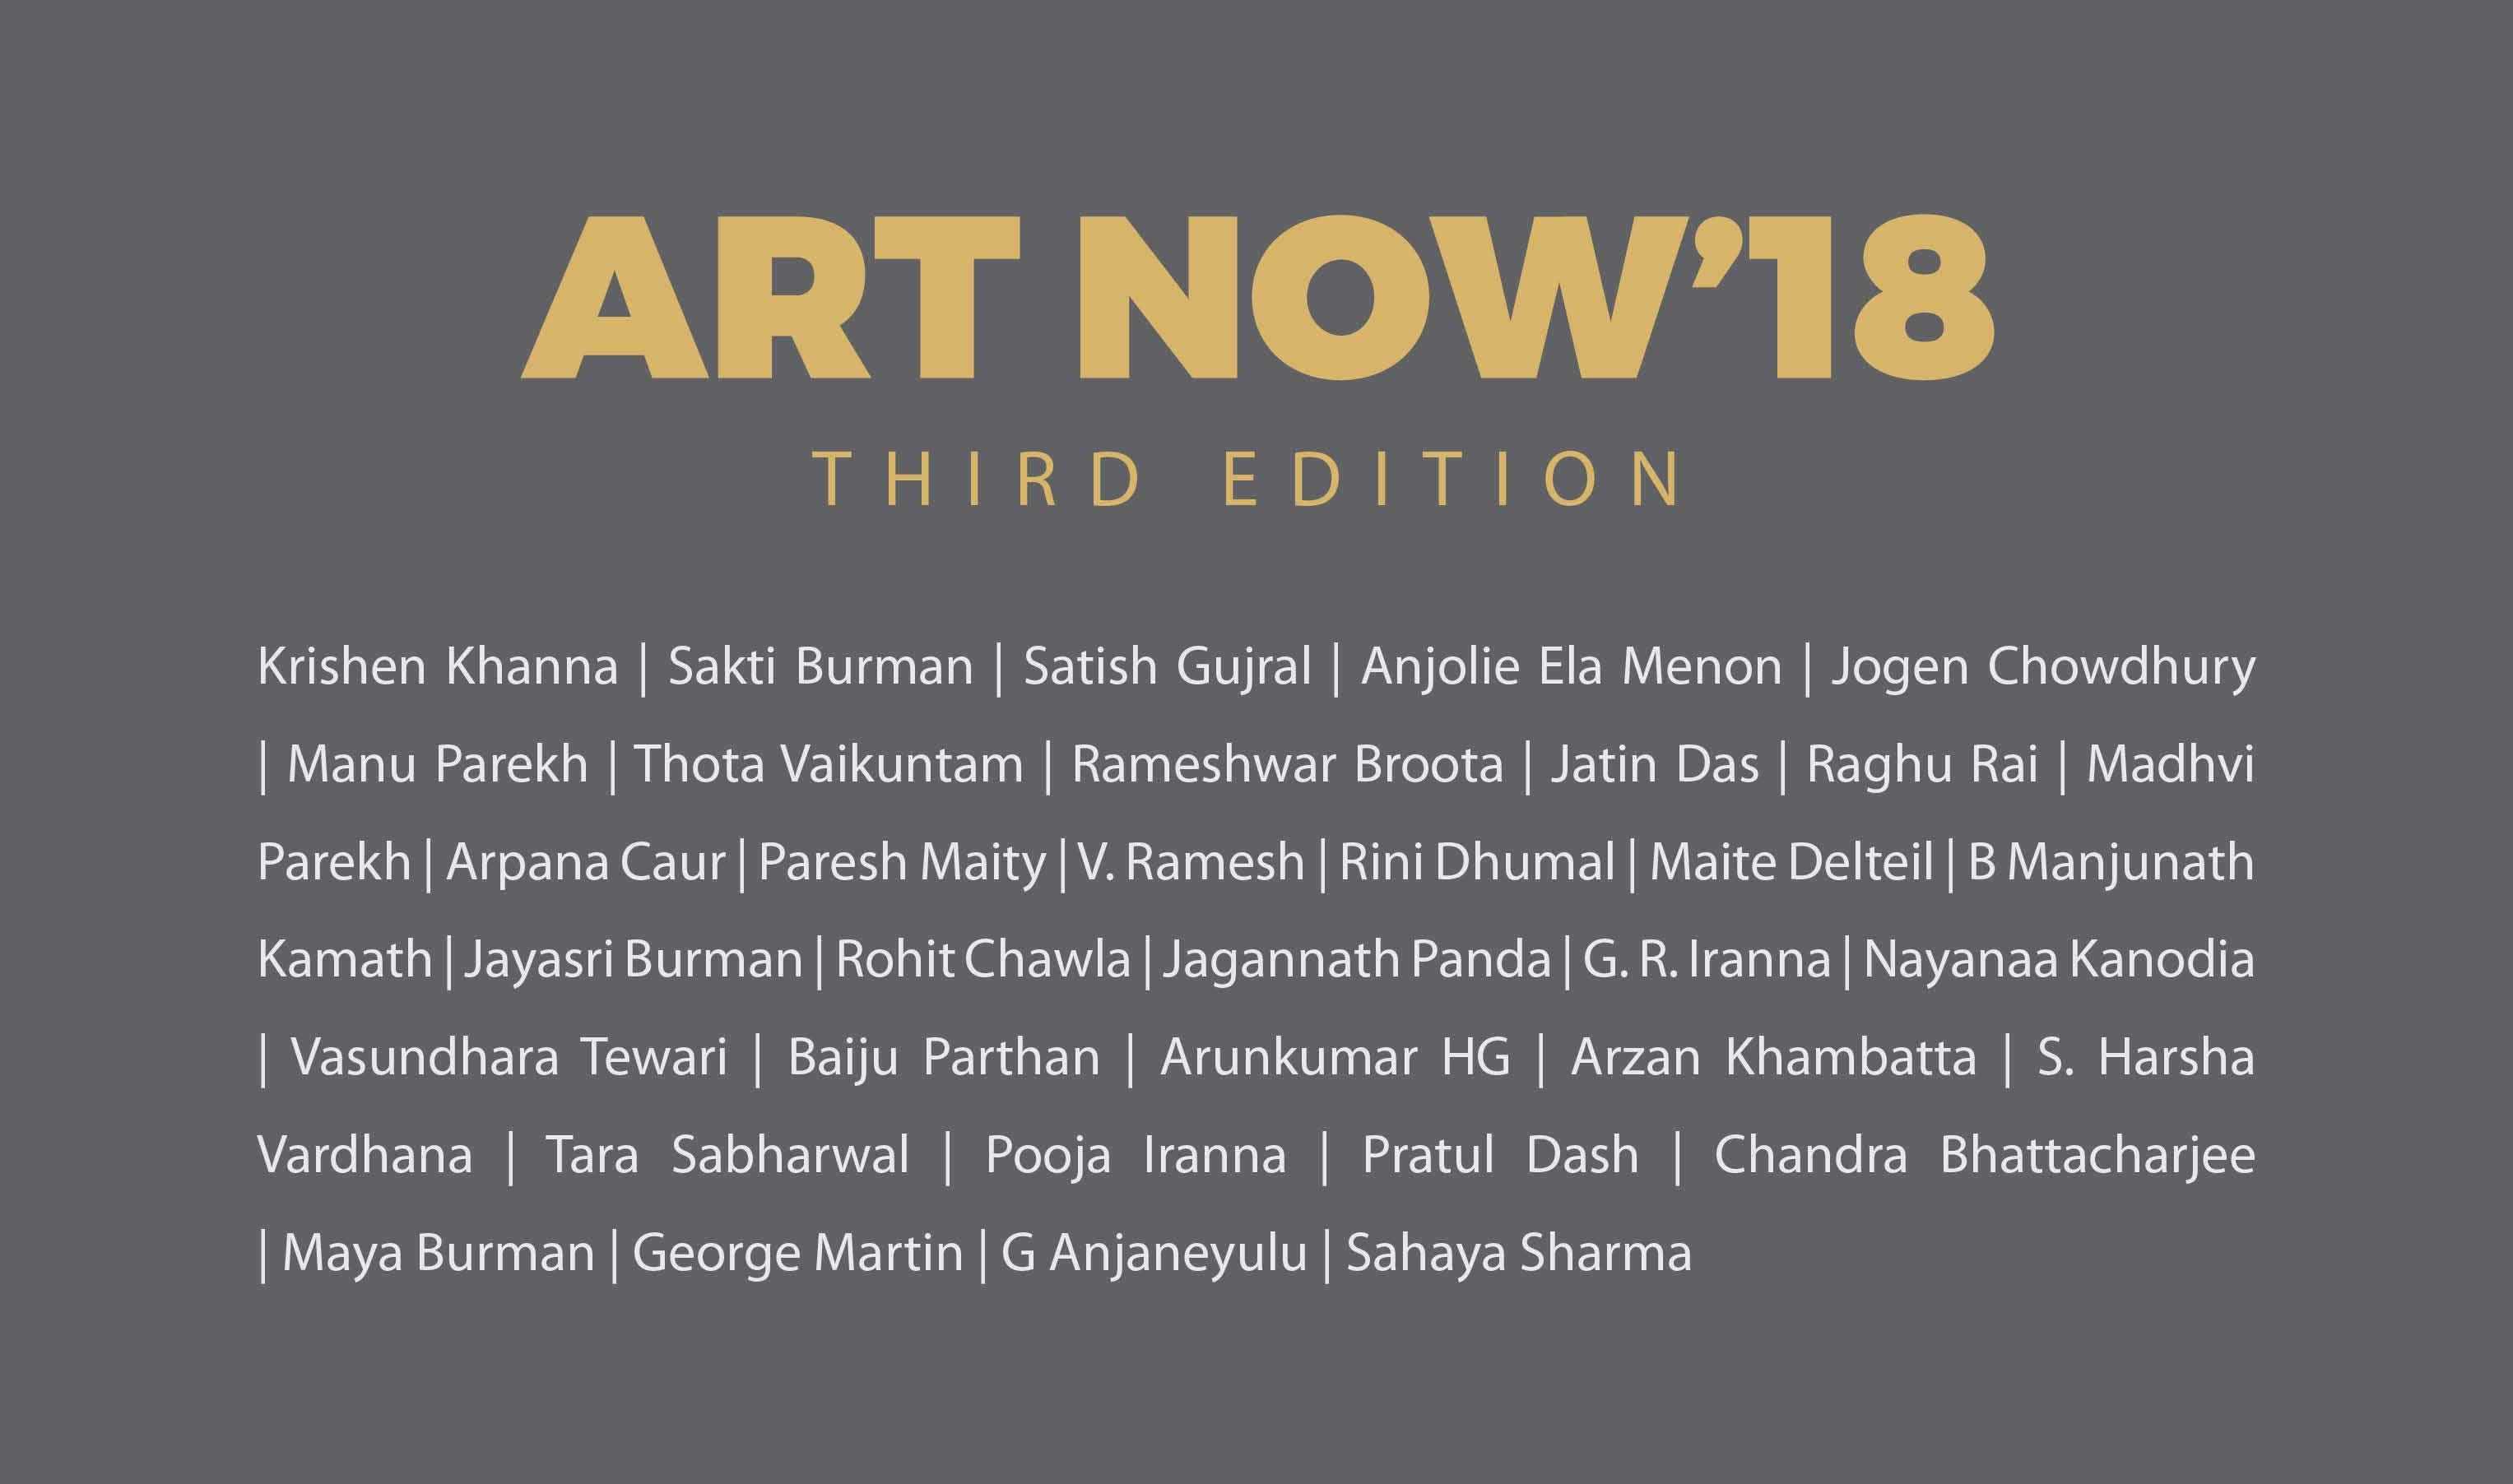 ART NOW' 18 |THIRD EDITION